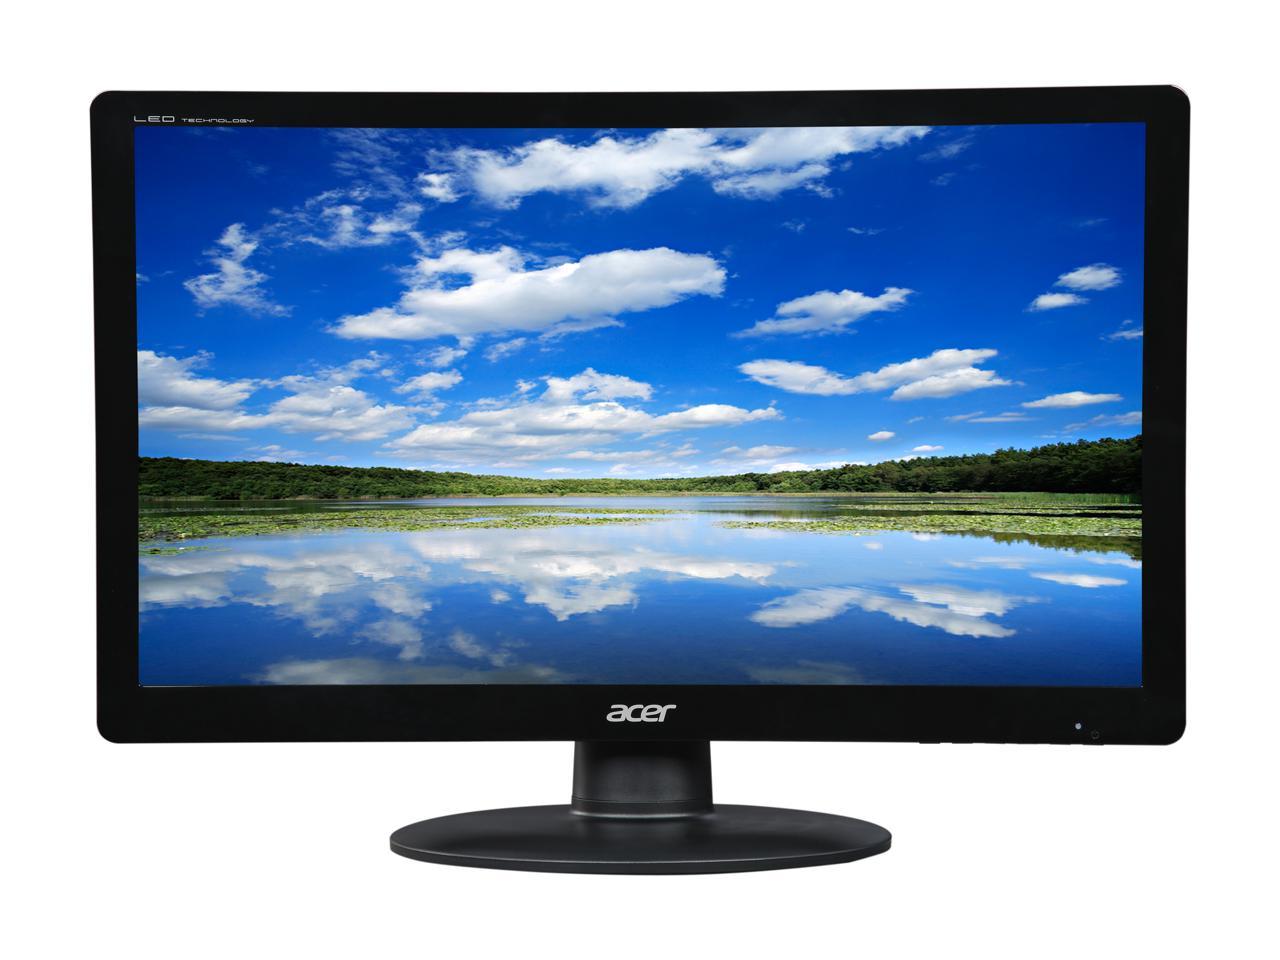 Acer S200HQL HB 19.5" LED Monitor